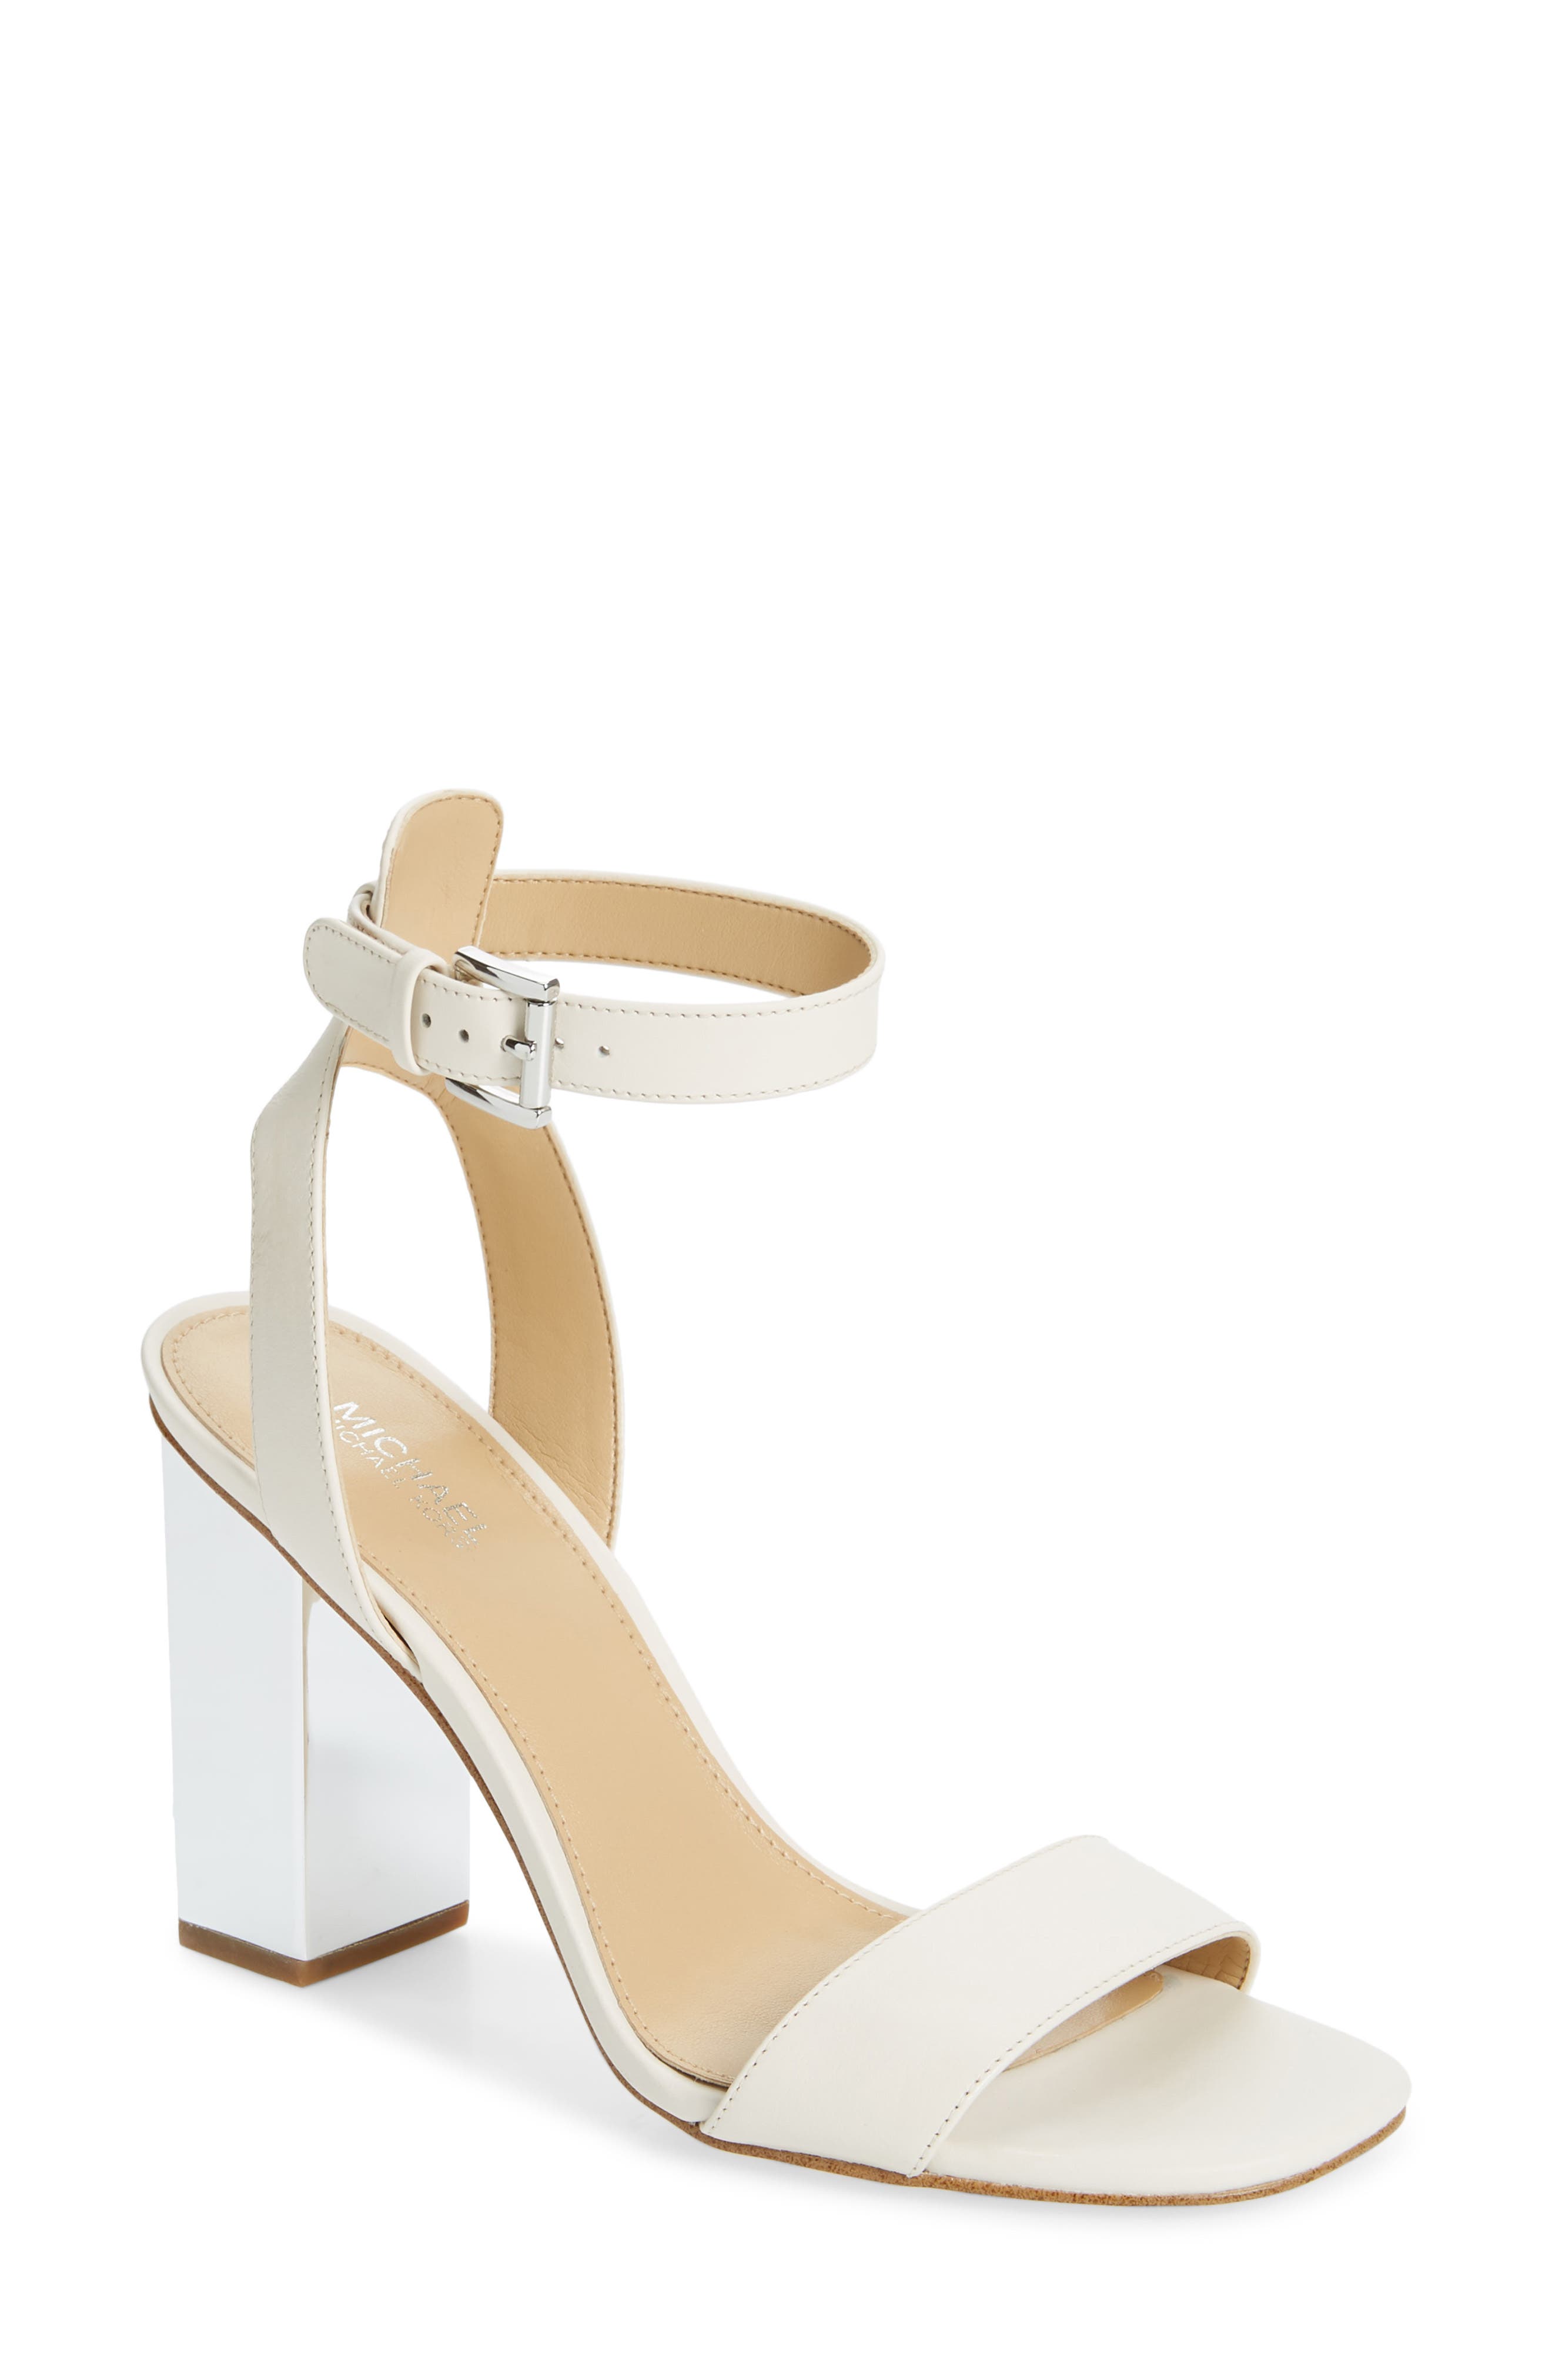 michael kors white heels